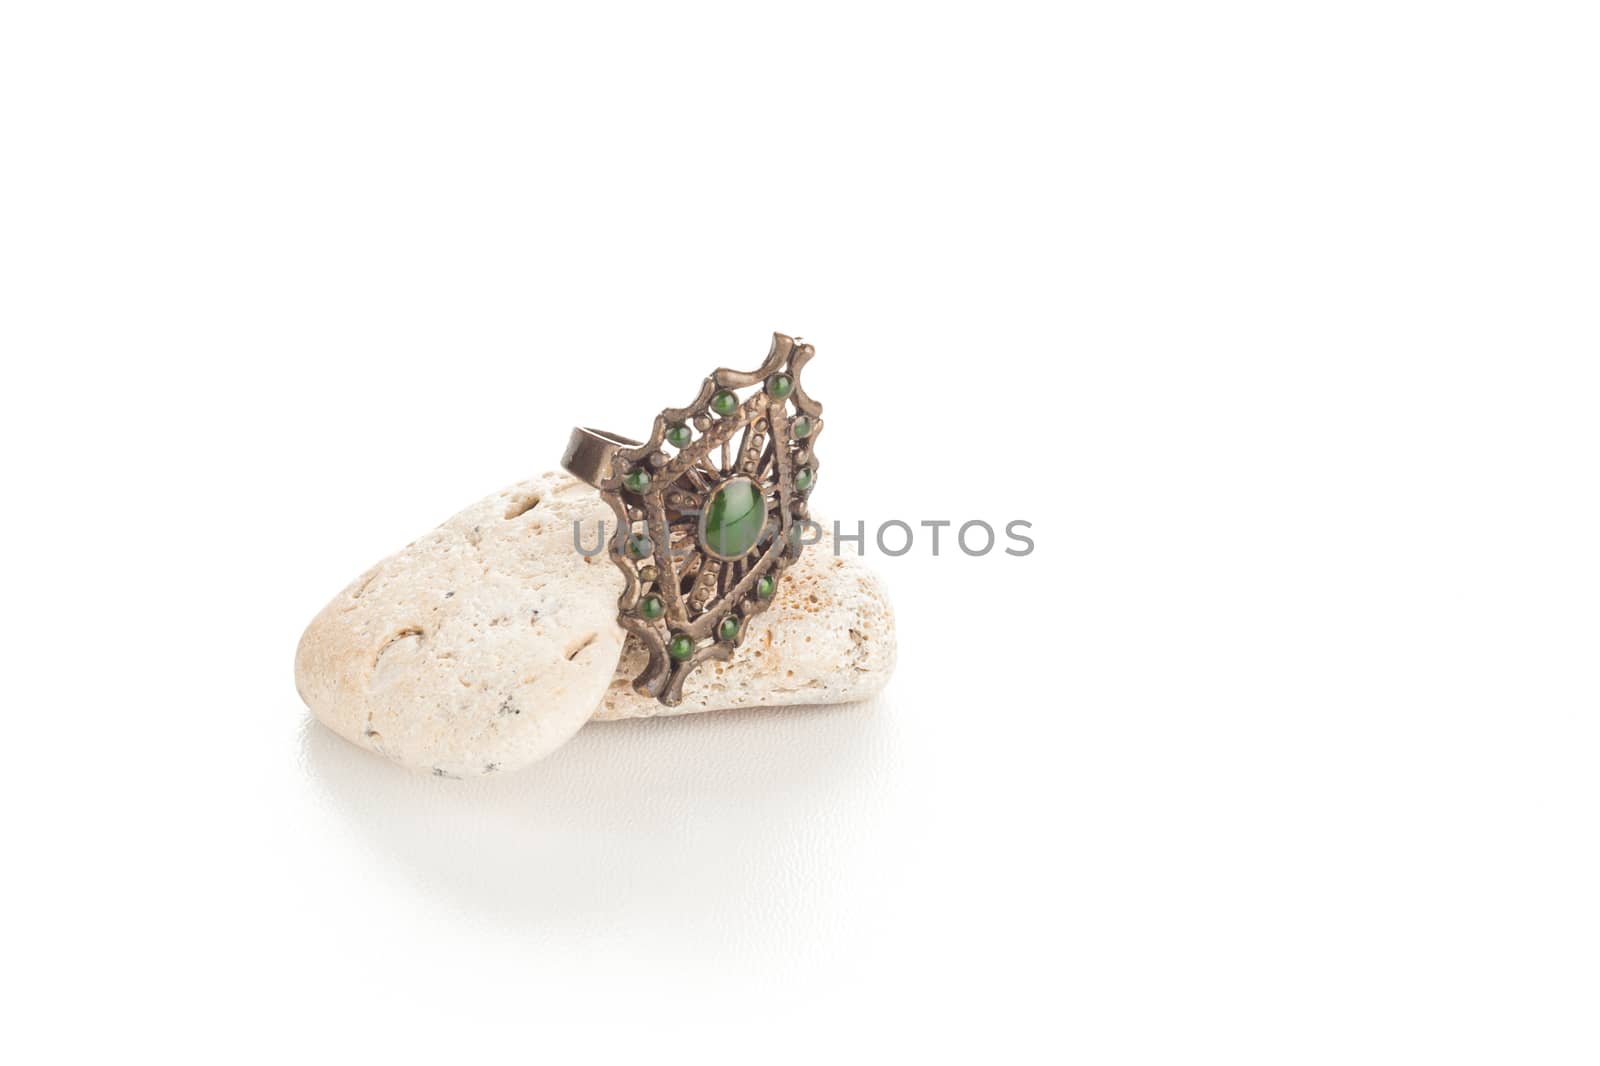 vintage metal fashion ring with green gems on rocks